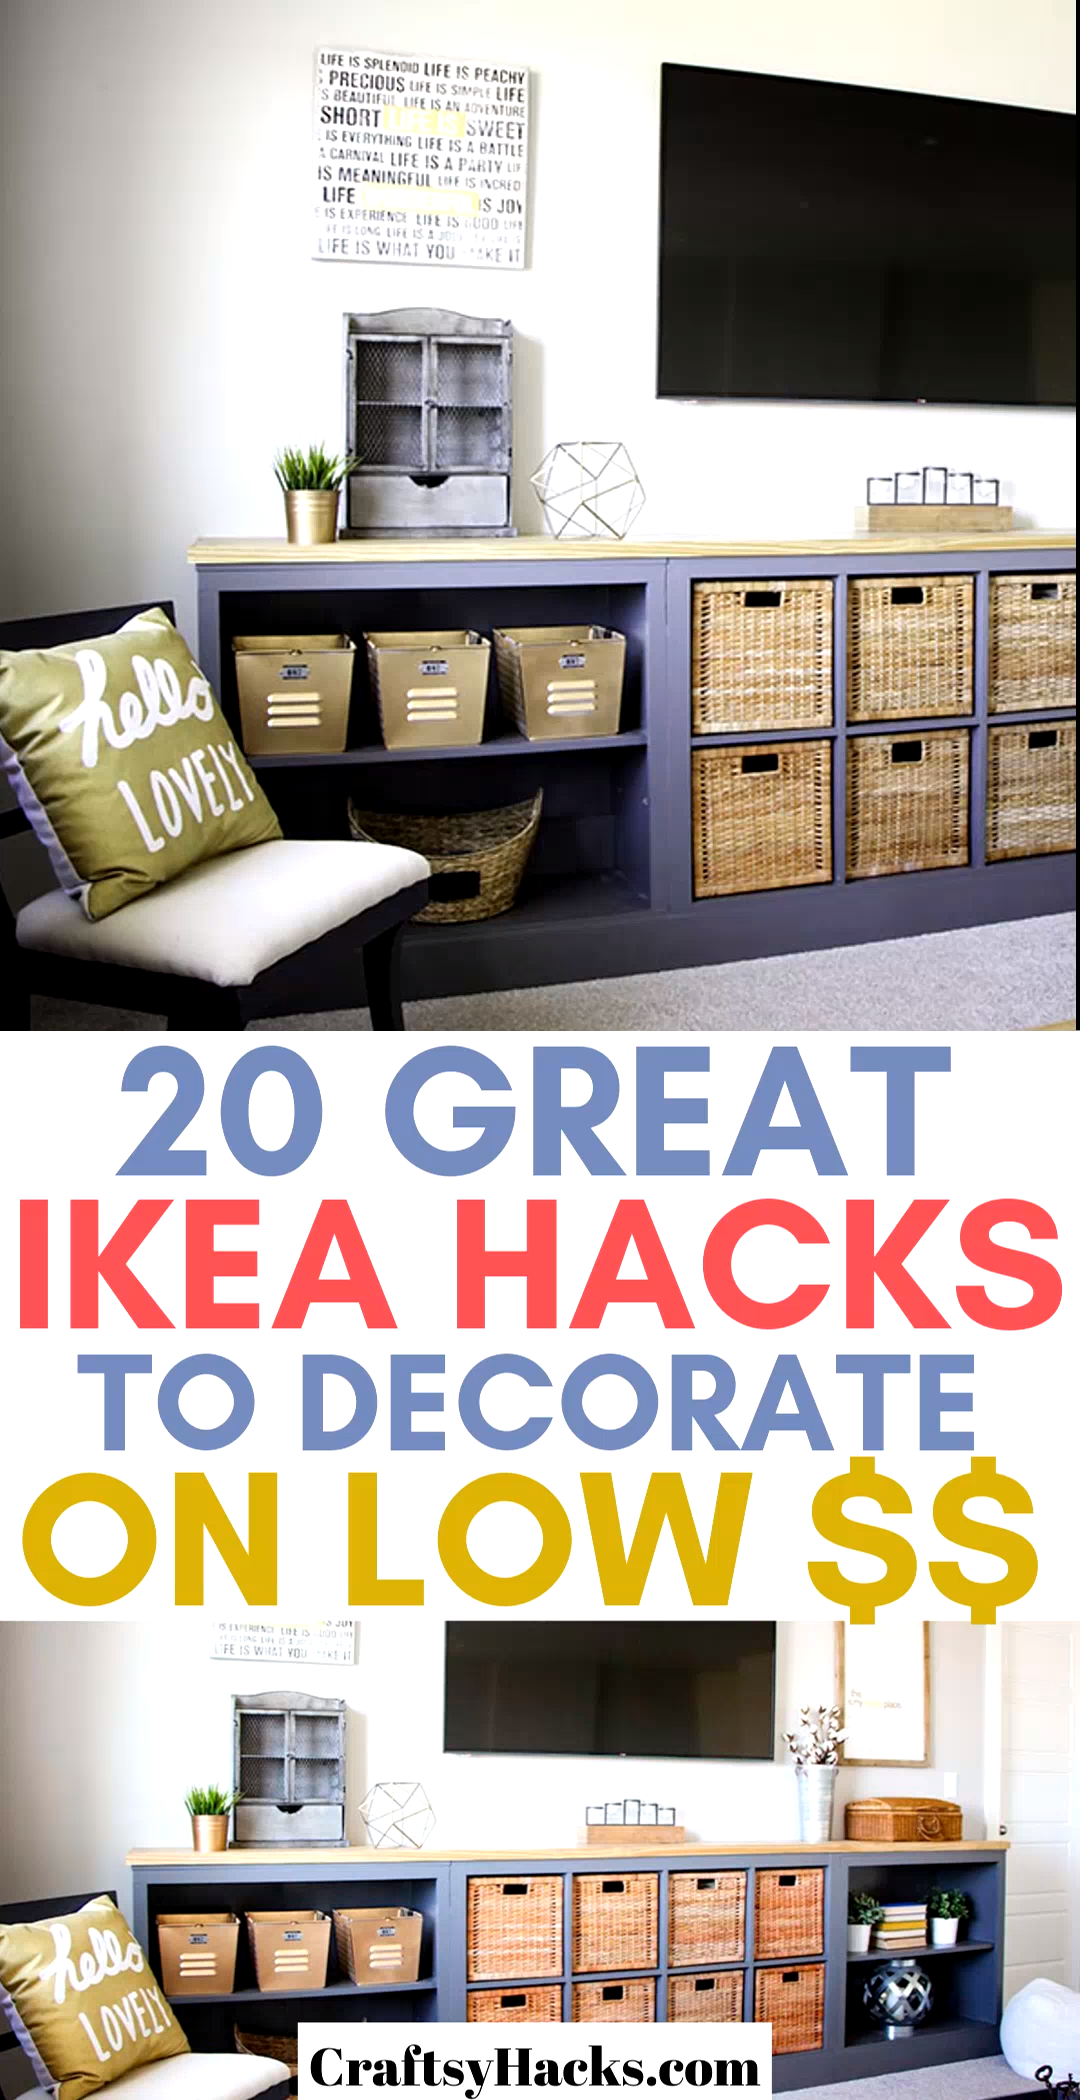 20 Great Ikea Hacks to Decorate on Low $$ - 20 Great Ikea Hacks to Decorate on Low $$ -   diy Apartment decorations